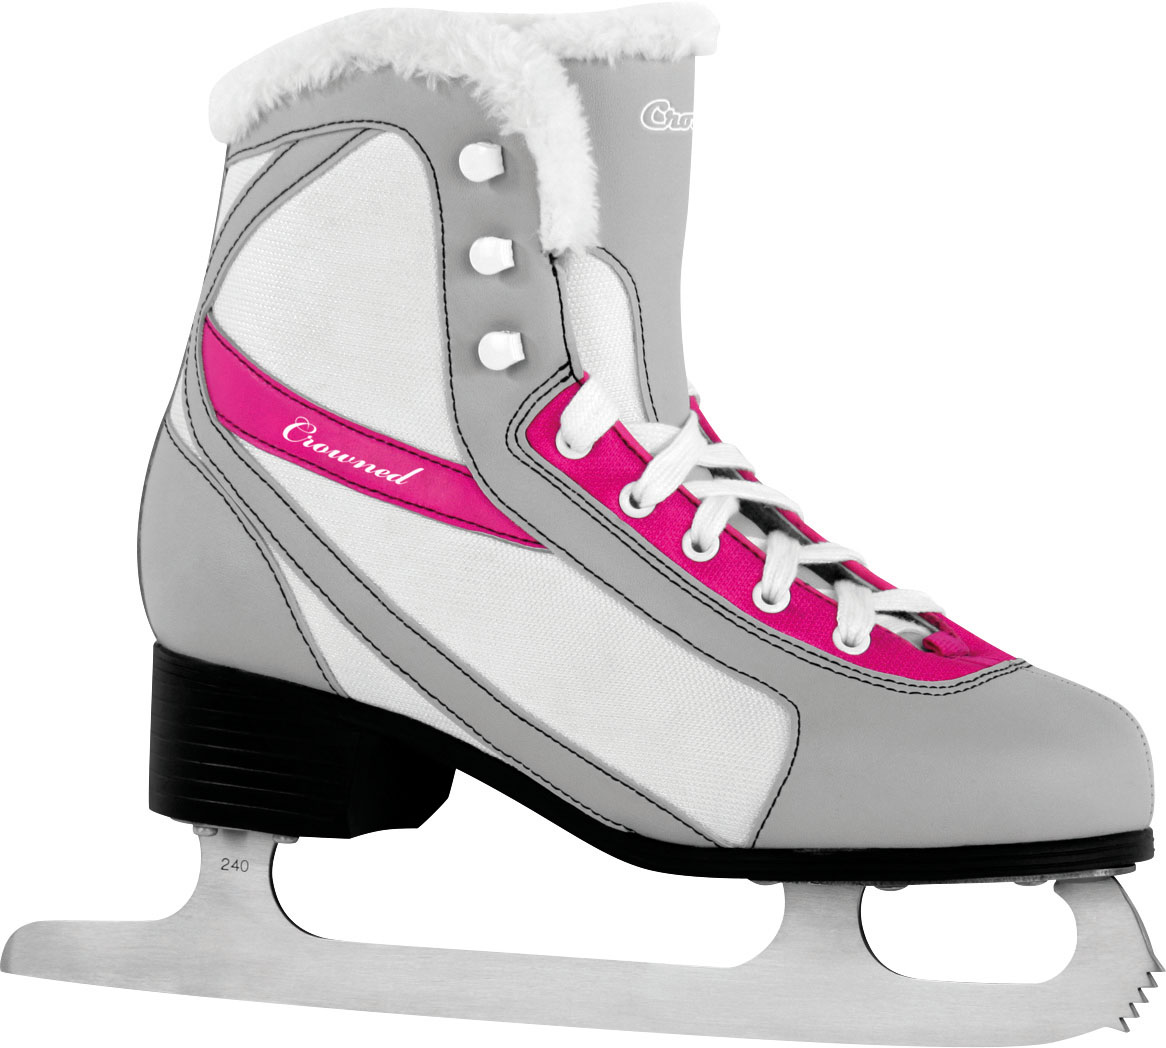 Women’s ice skates